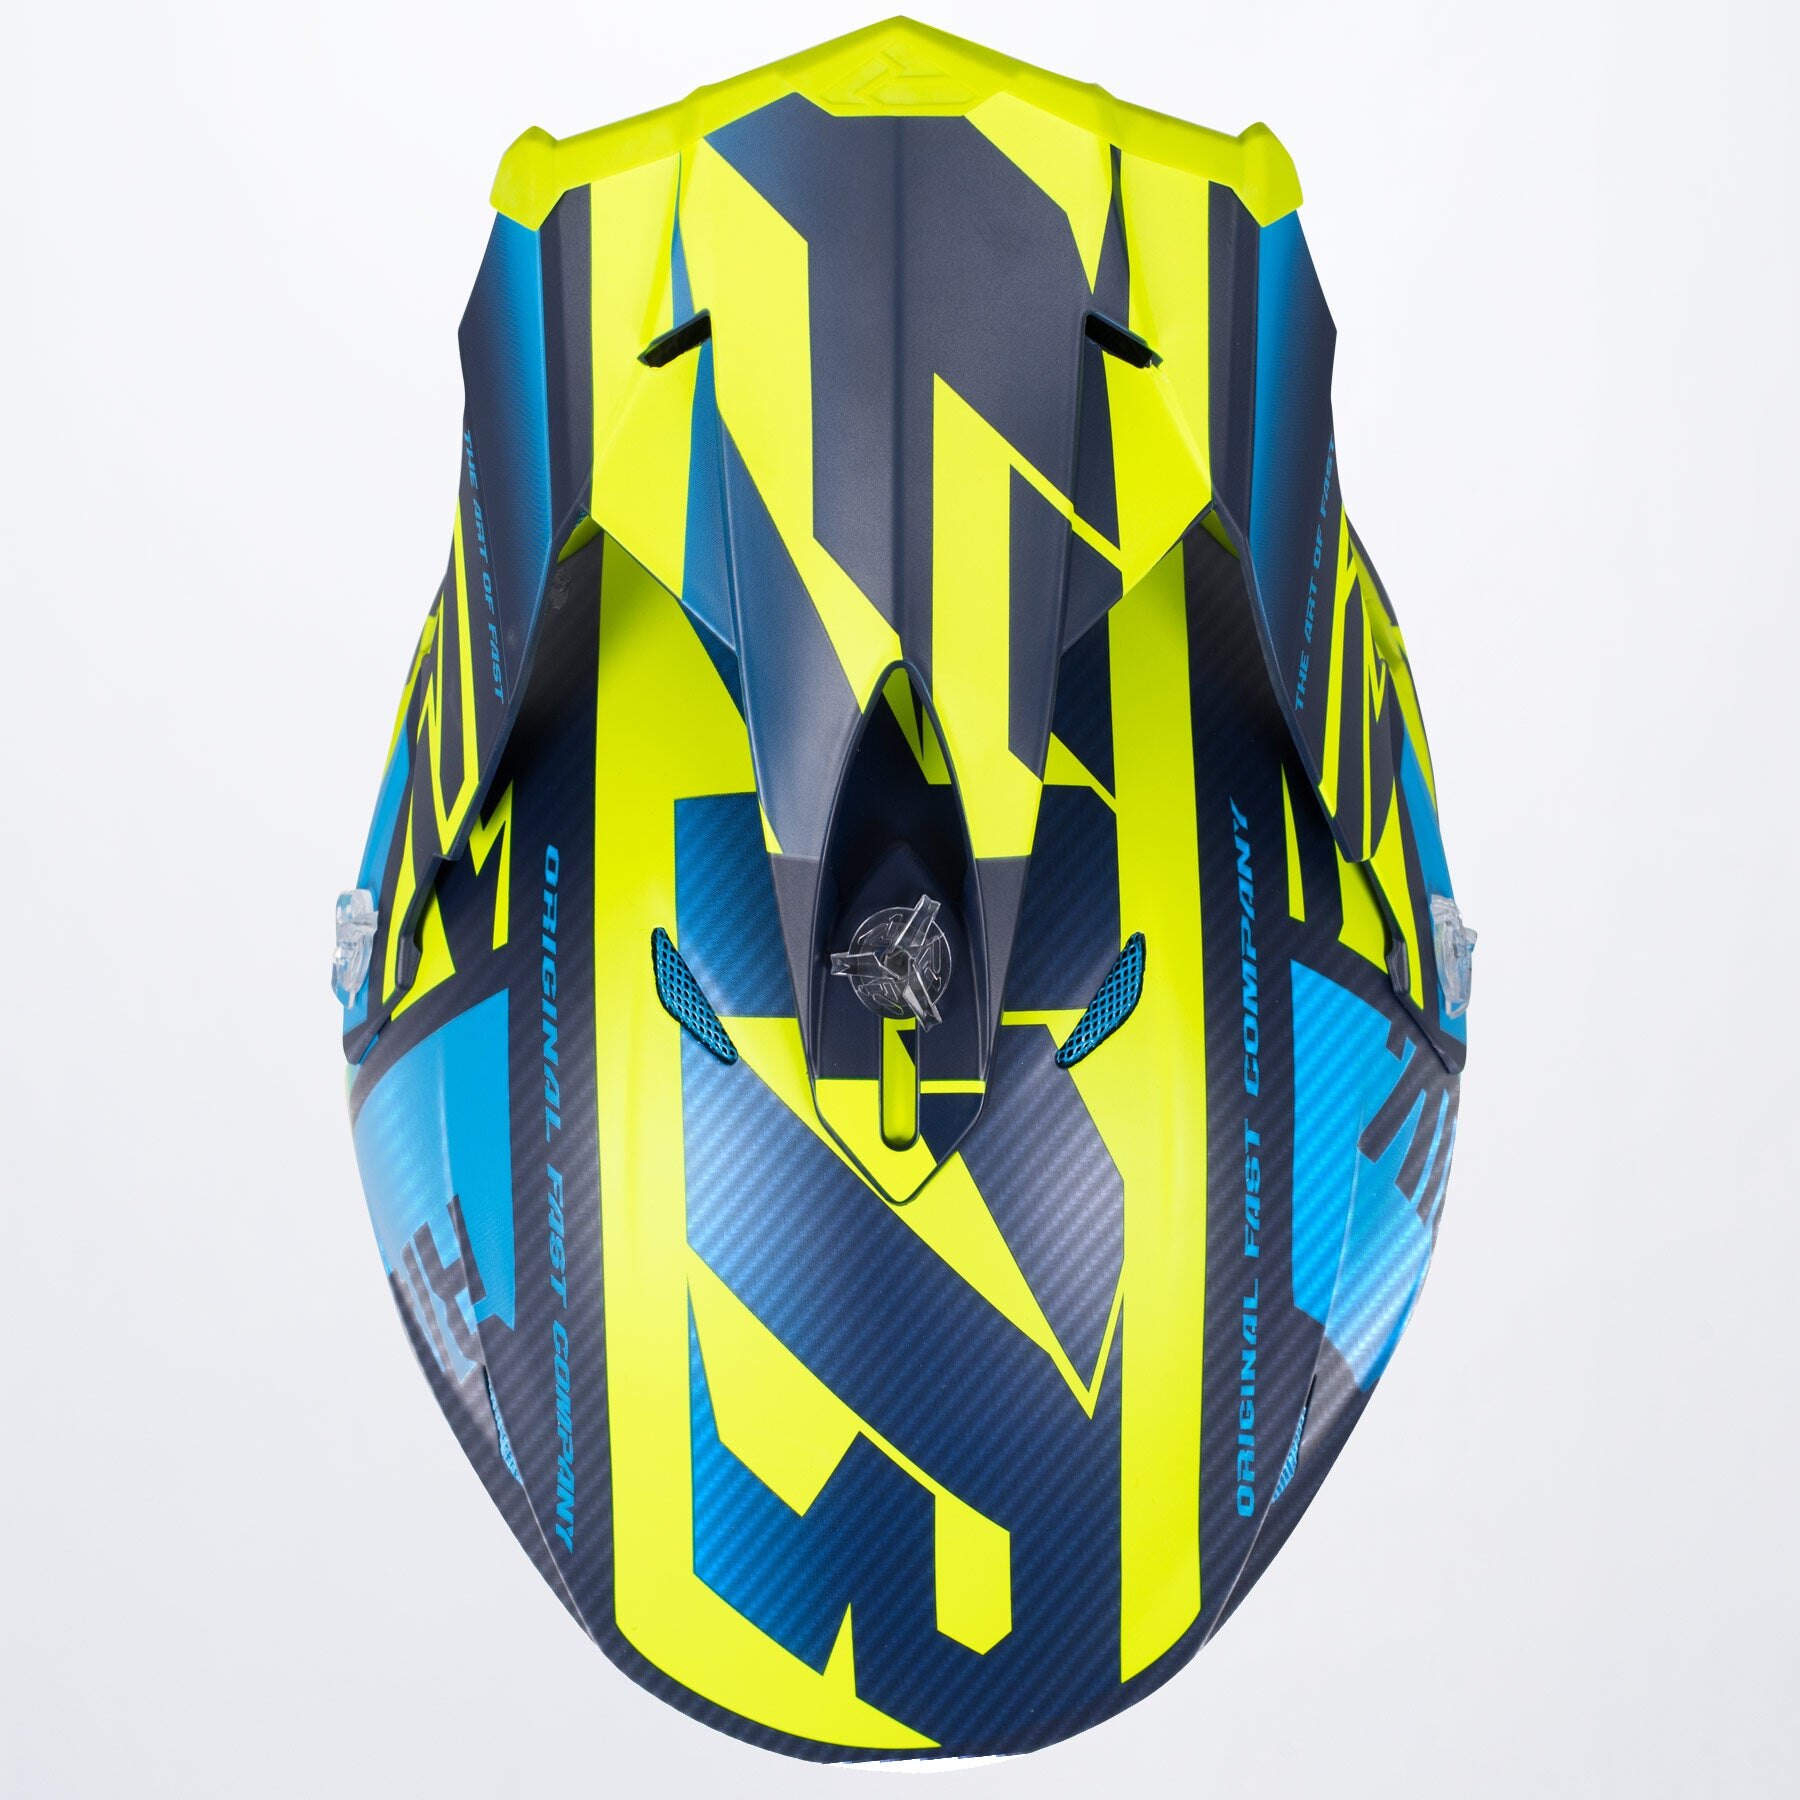 Blade 2.0 Carbon Race Div Helmet